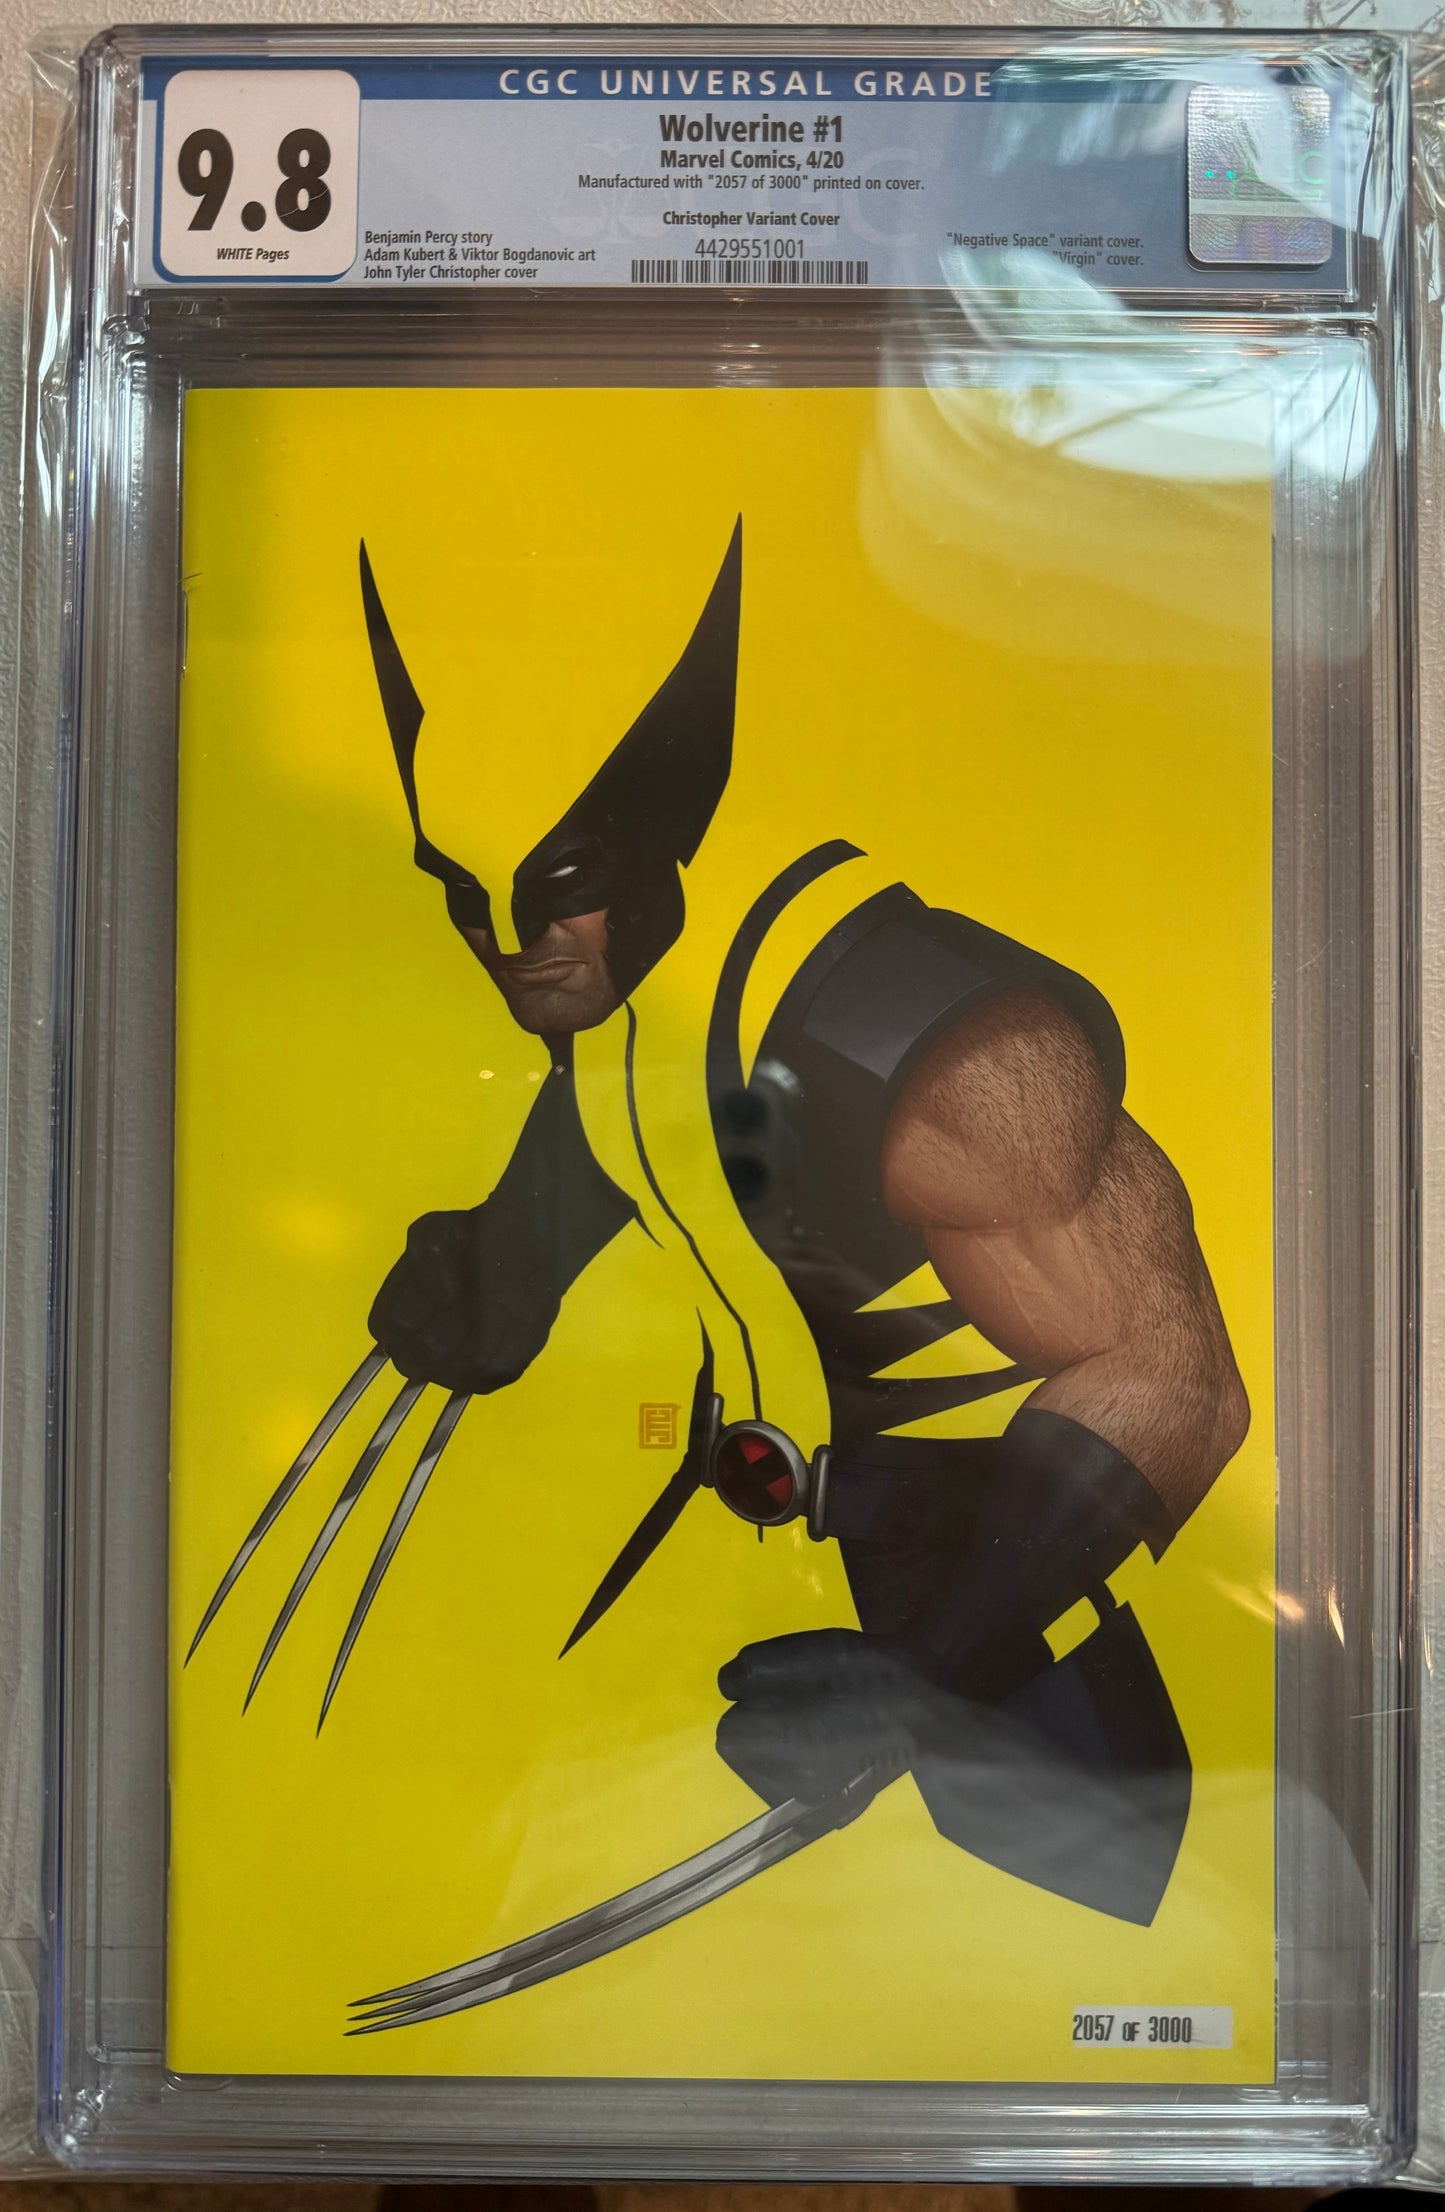 Wolverine #1 CGC 9.8 (Marvel, 2020) Christopher Variant 2057/3000